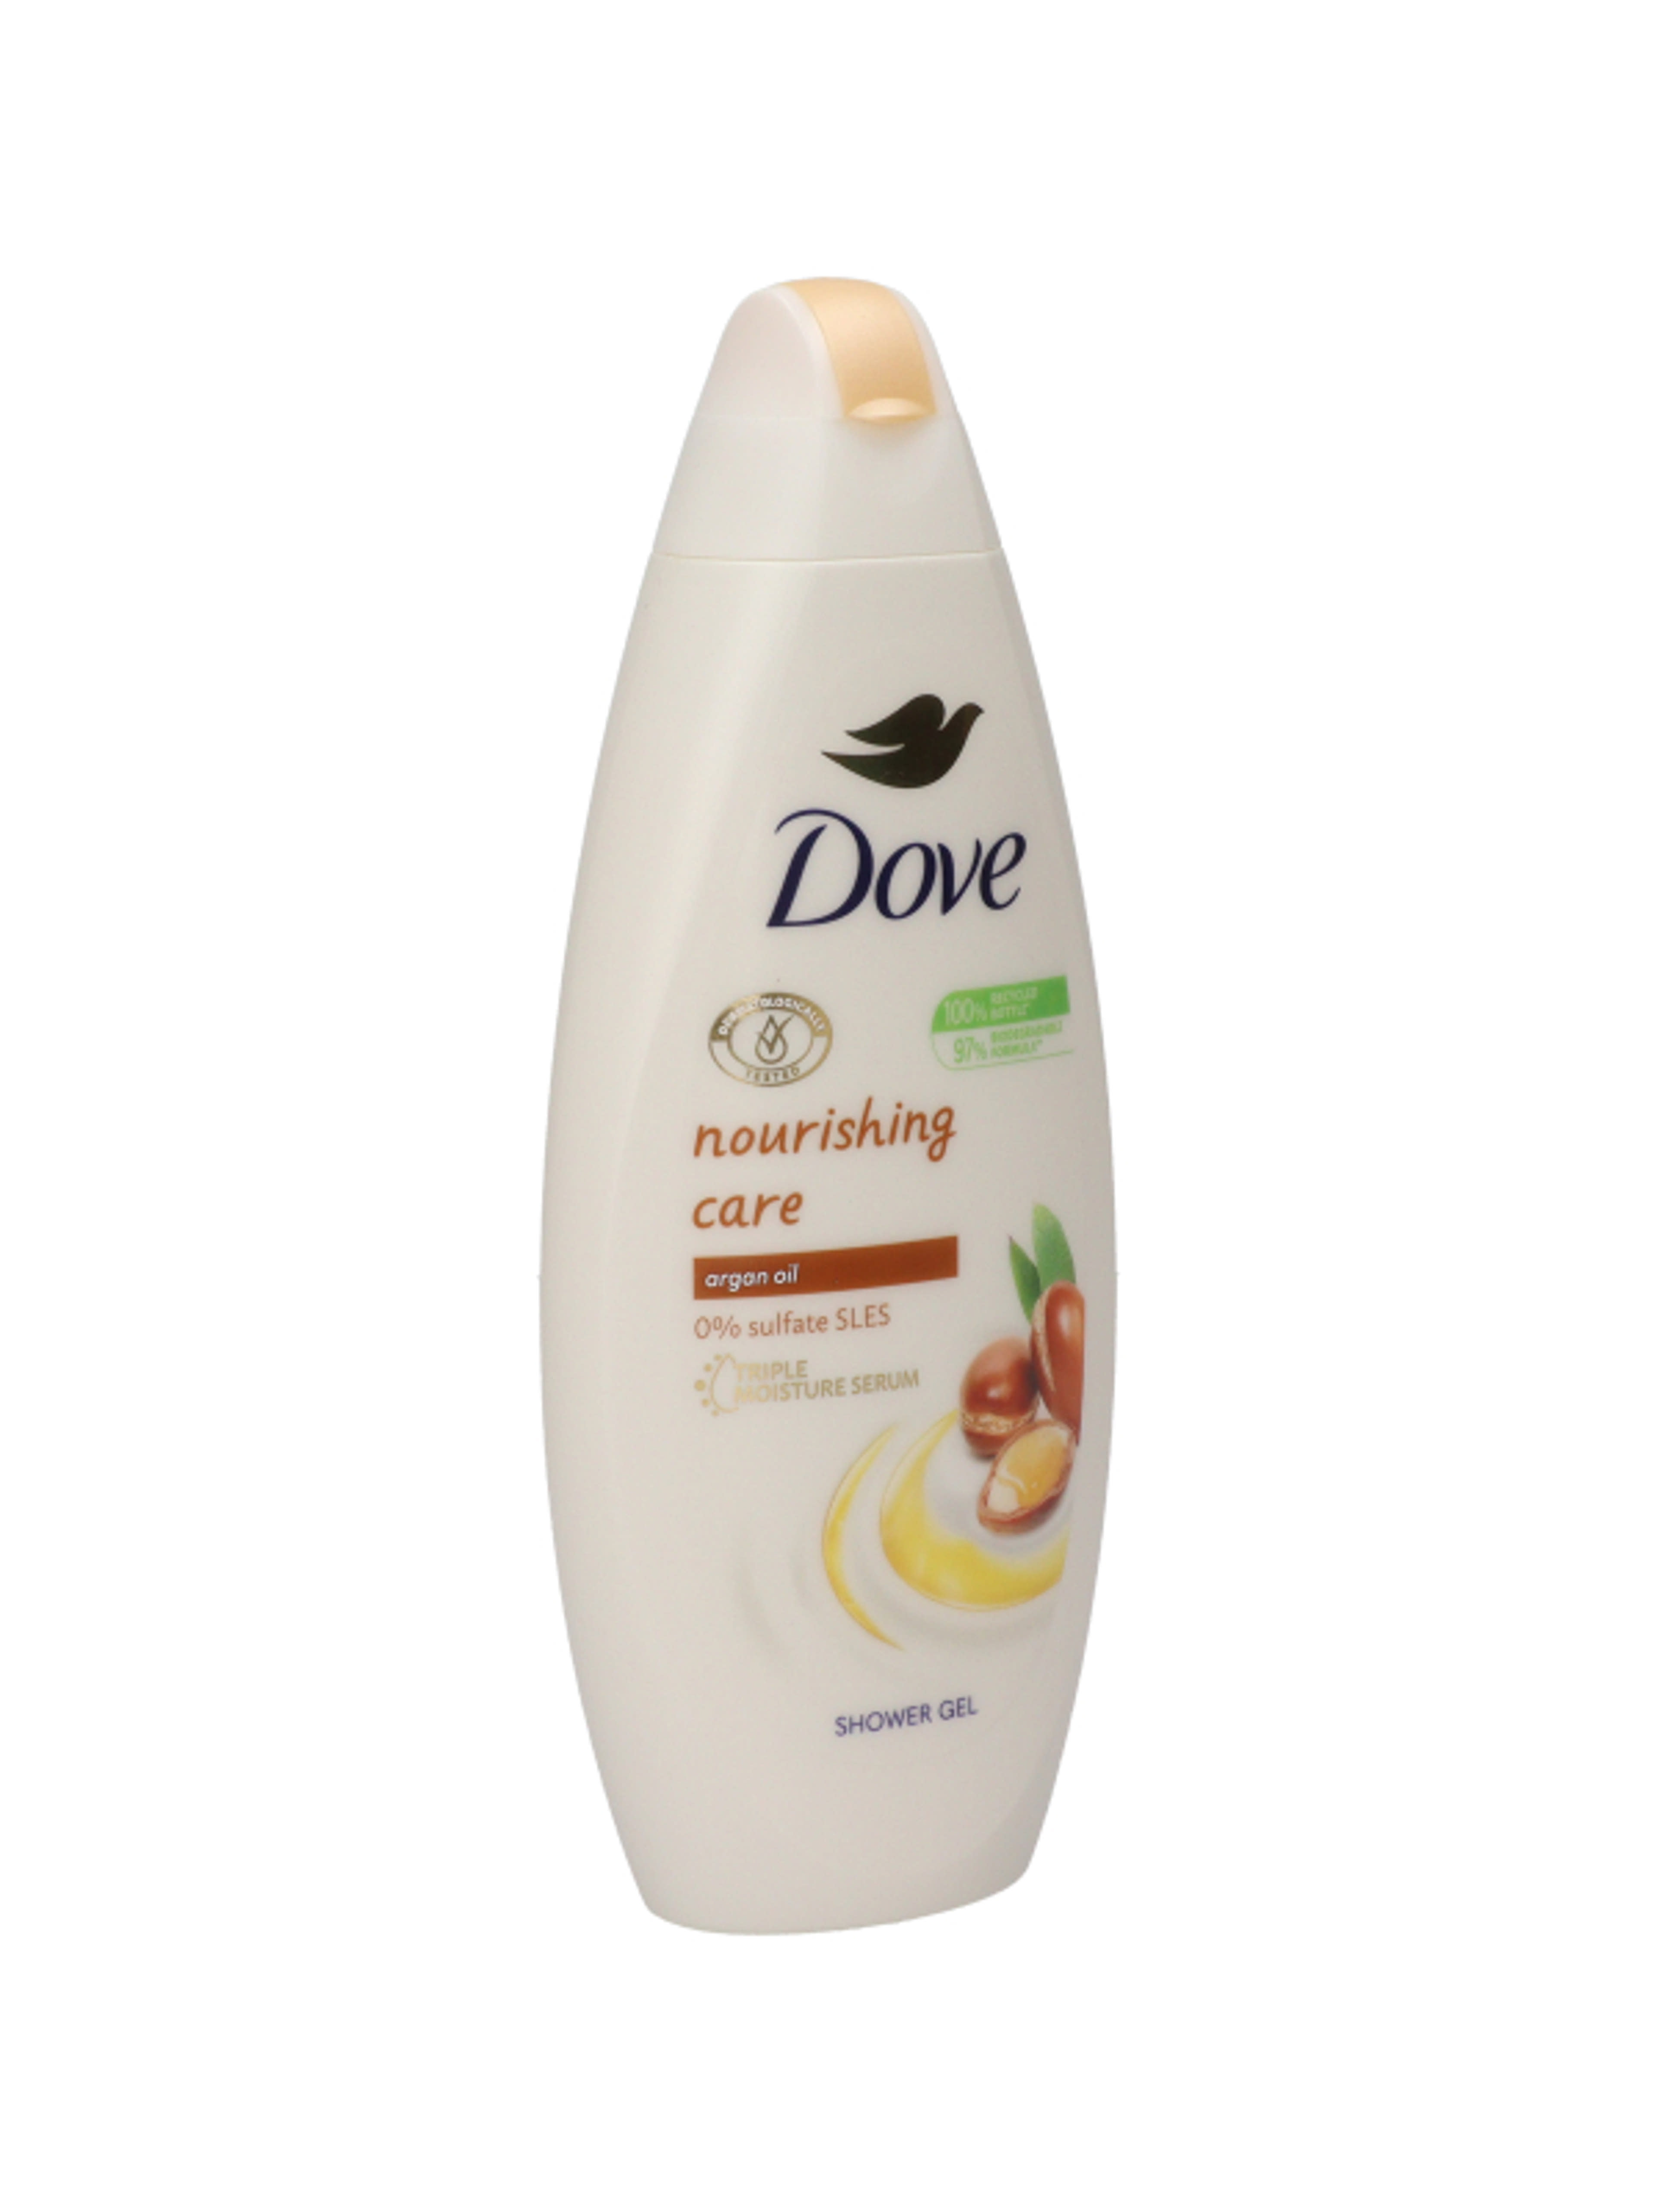 Dove Nourishing Care & Oil krémtusfürdő marokkói argán olajjal - 250 ml-5